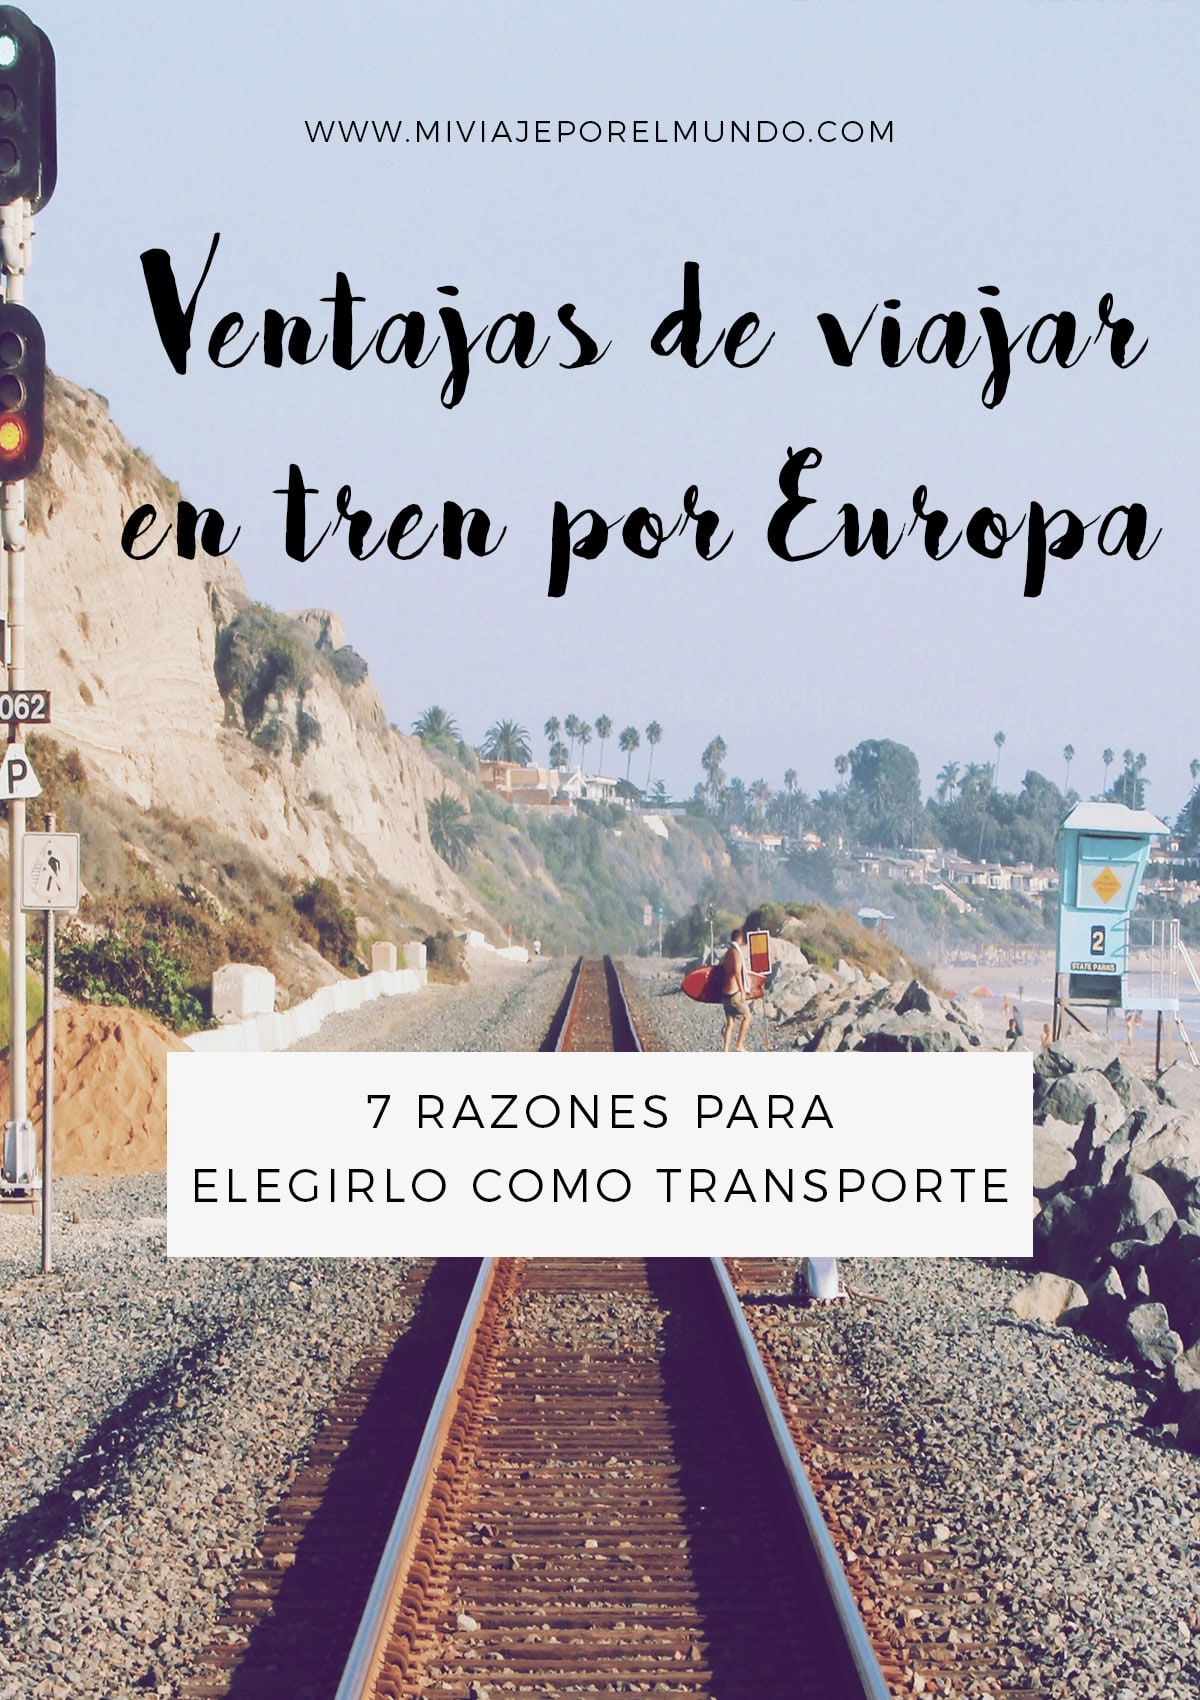 ventajas de viajar en tren por europa